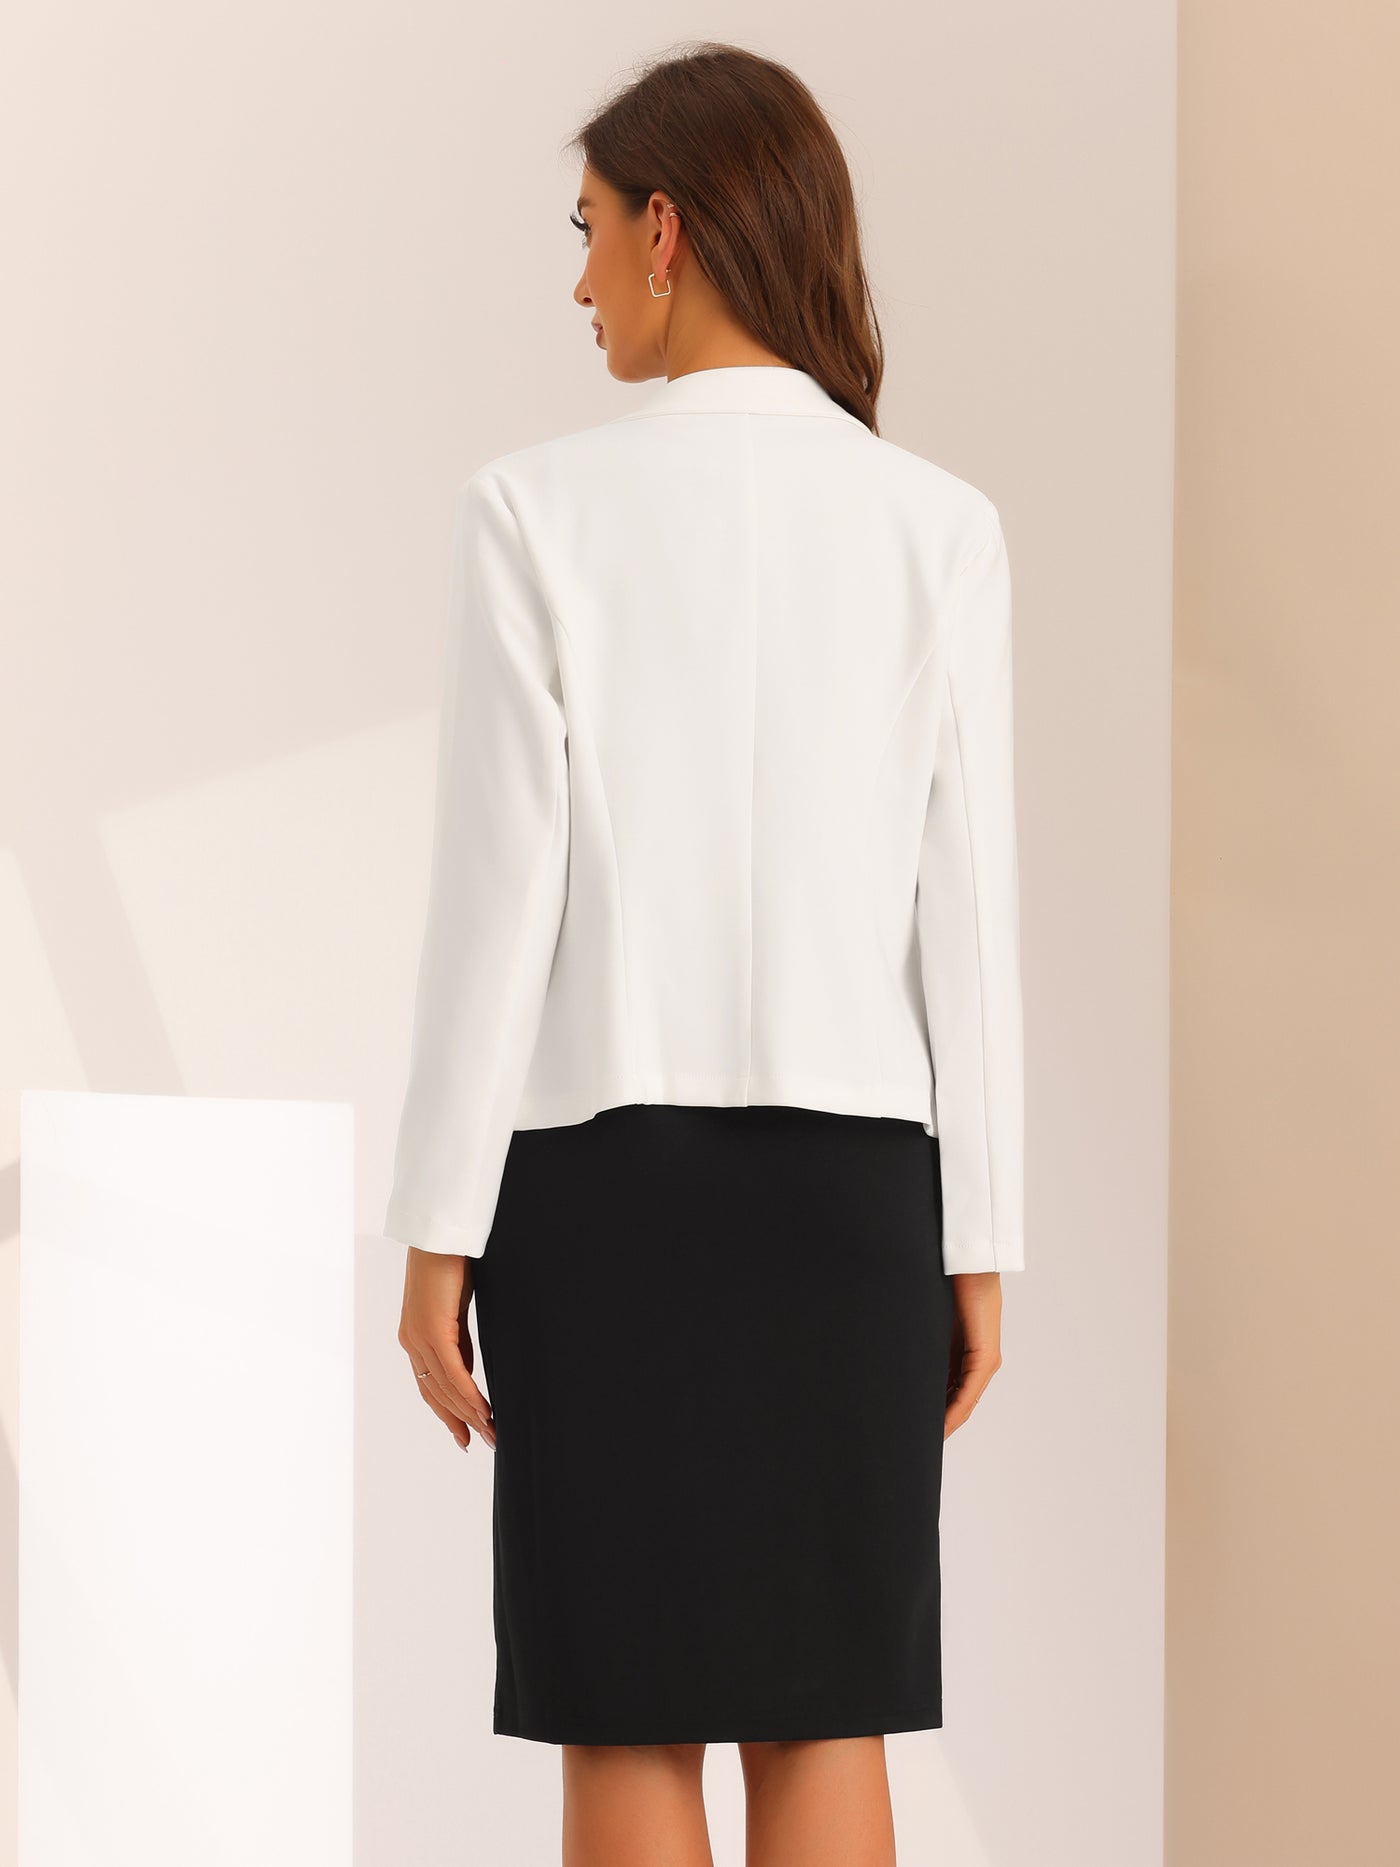 Allegra K Dress Suit Sets for Women's Business 2pc Outfit Solid V Neck Office Dress Notched Lapel Blazer